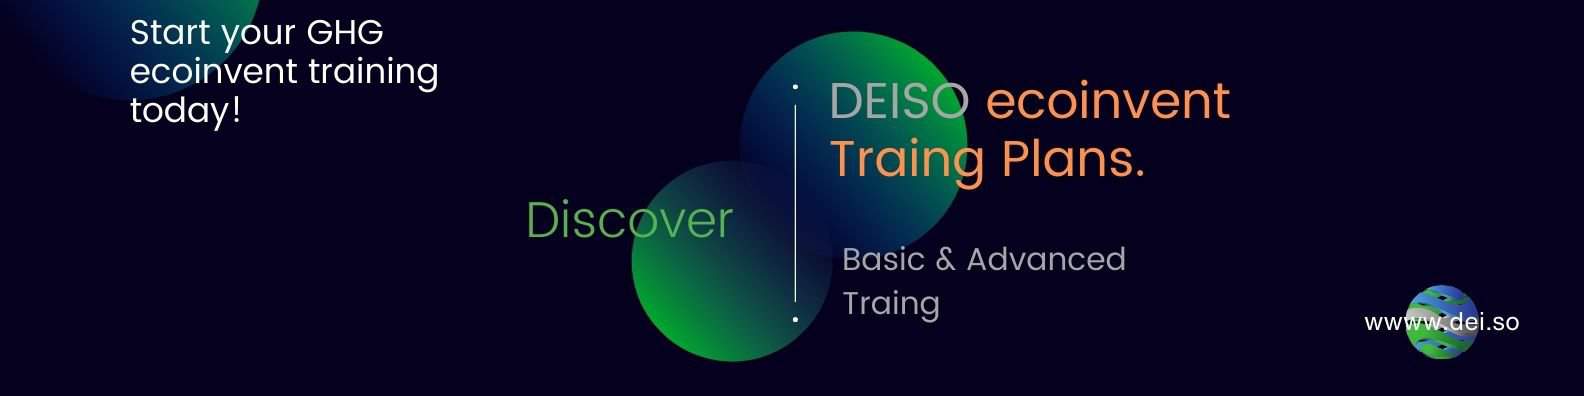 DEISO ecoinvent training plans & courses